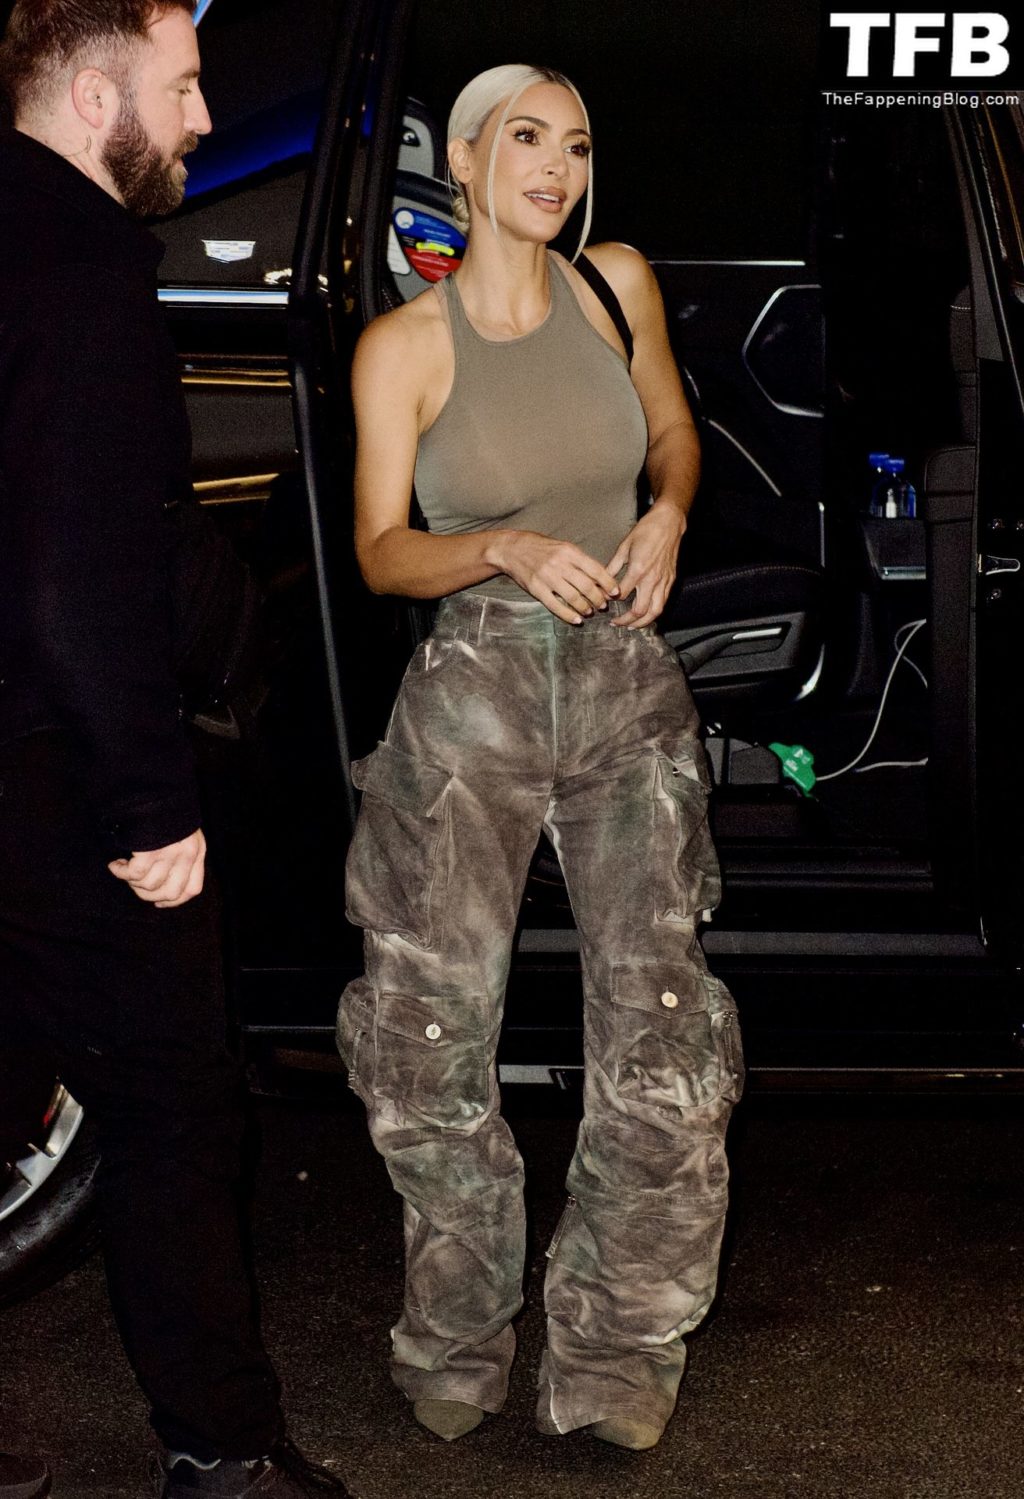 Kim Kardashian Leaves the American Dream Mall in NYC (73 Photos)